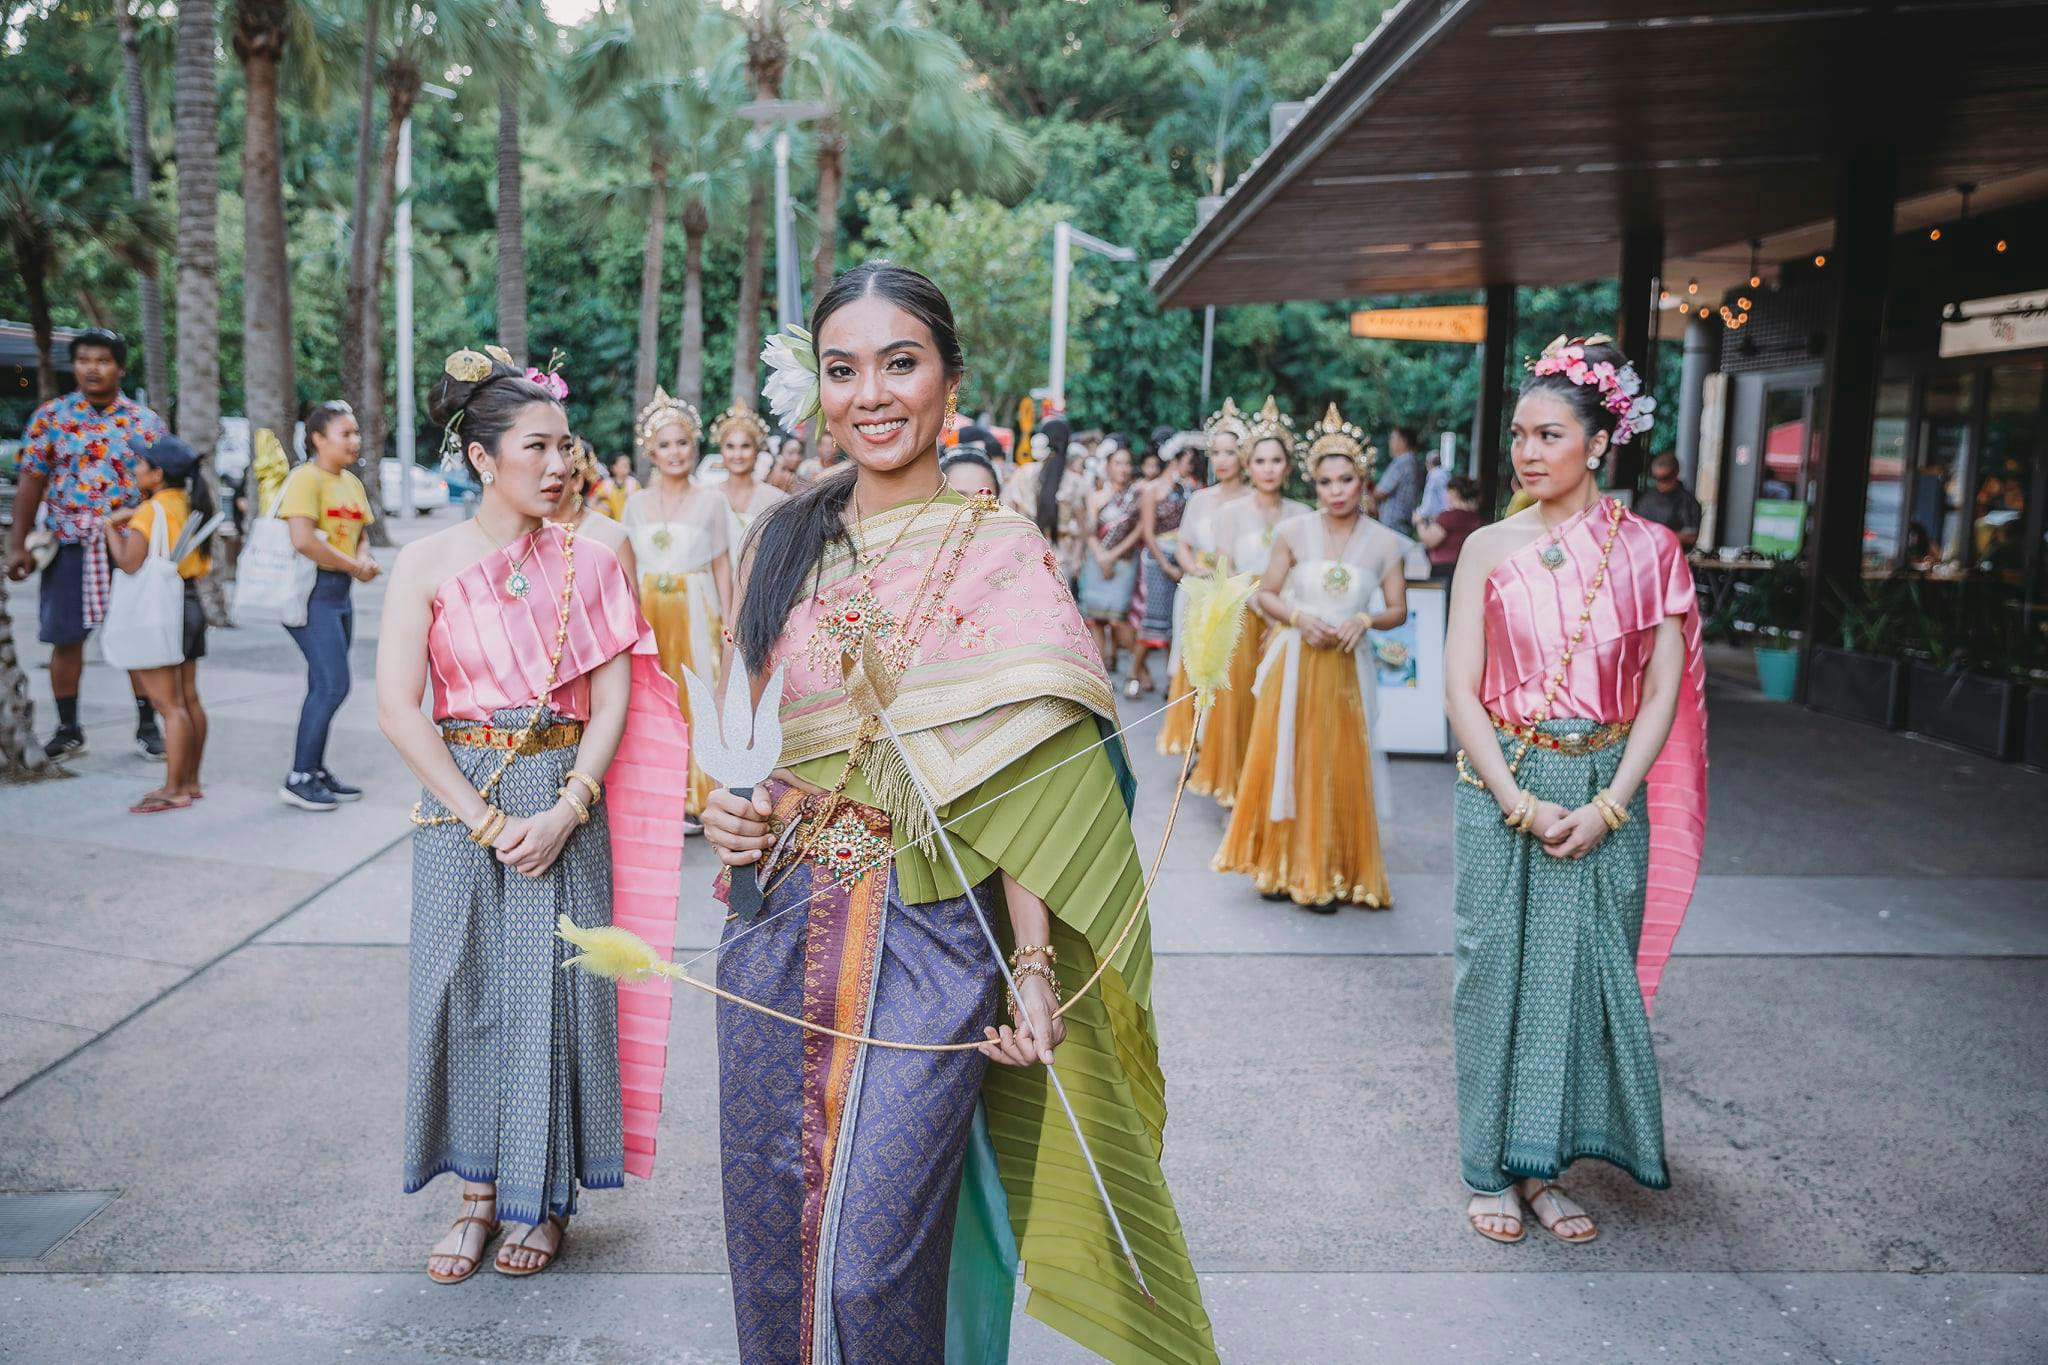 Thailand Grand Festival celebrates Thai culture